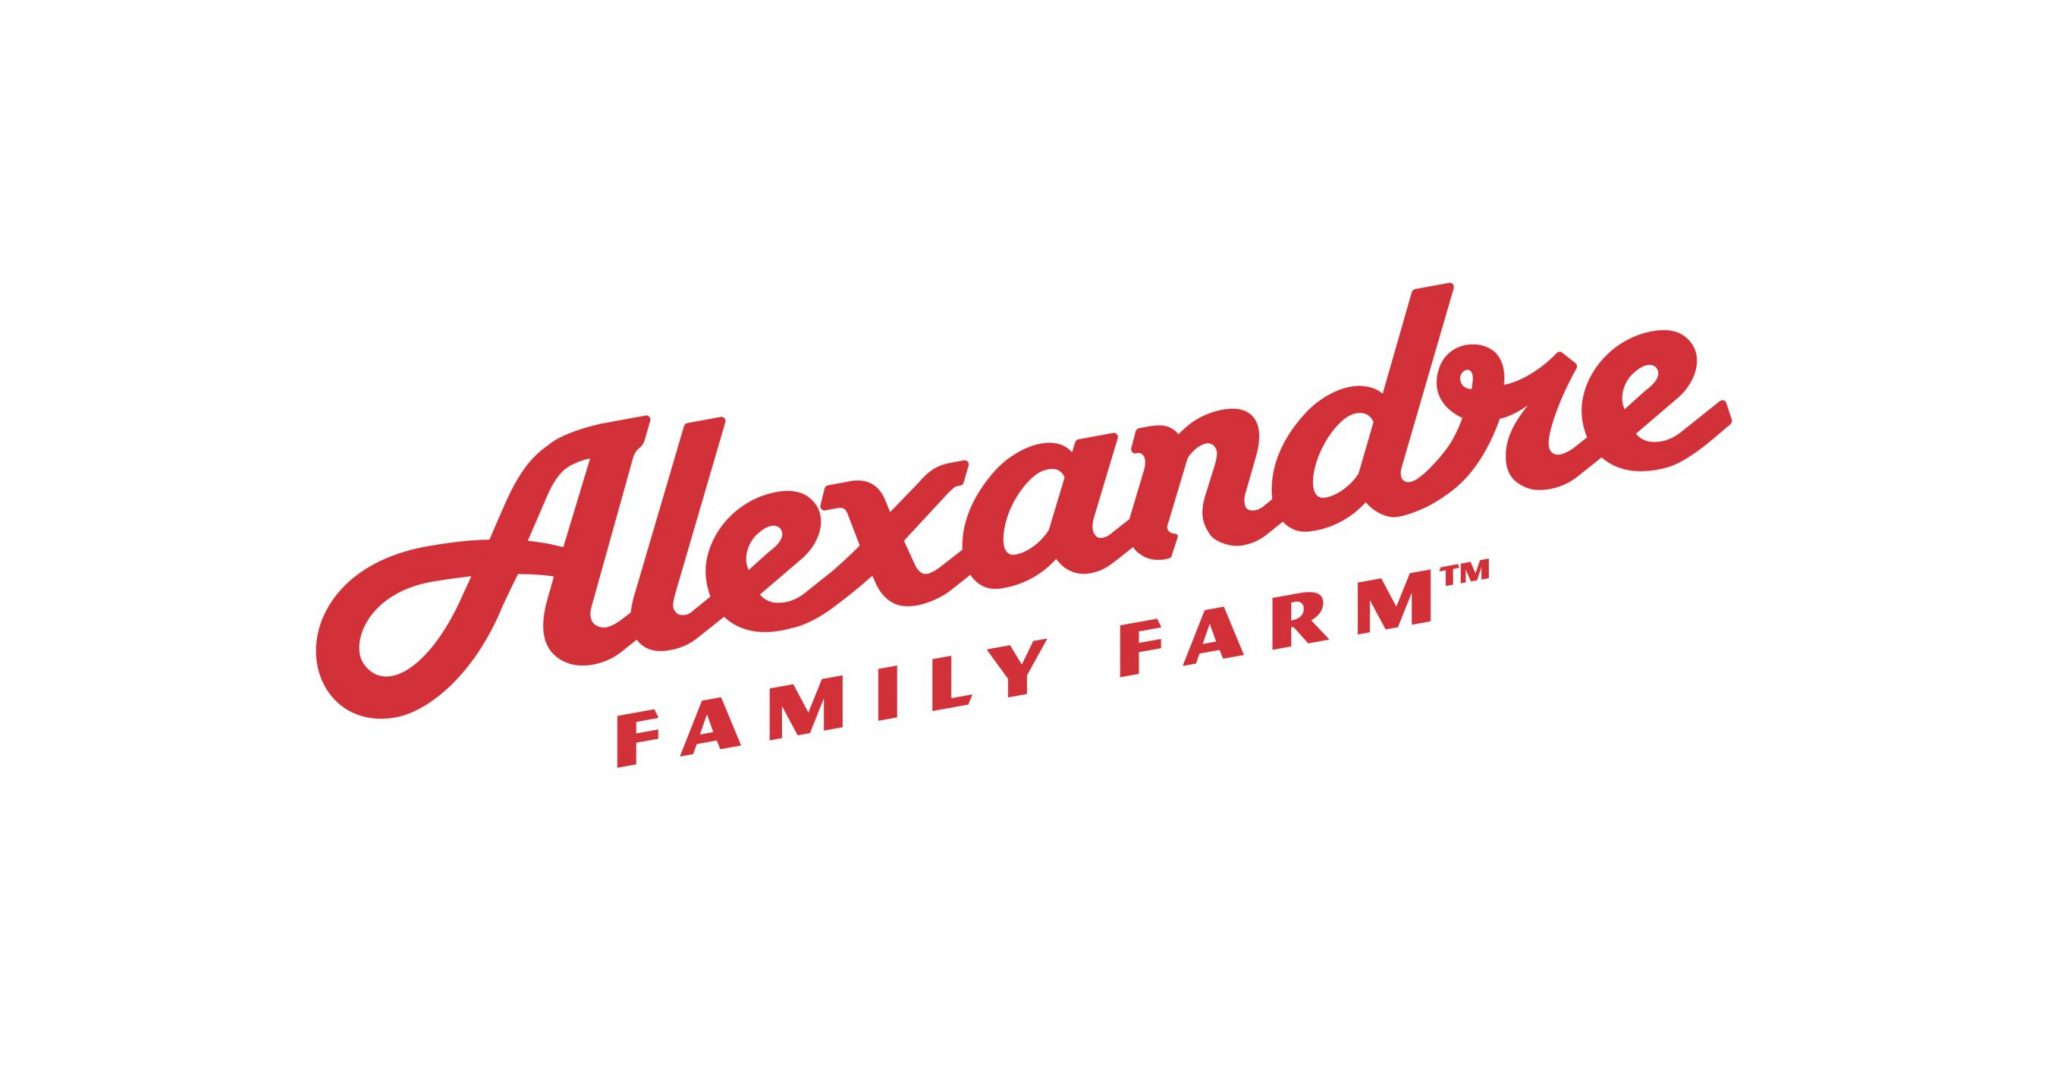 Alexandre Family Farm - Land to Market Member - Logo